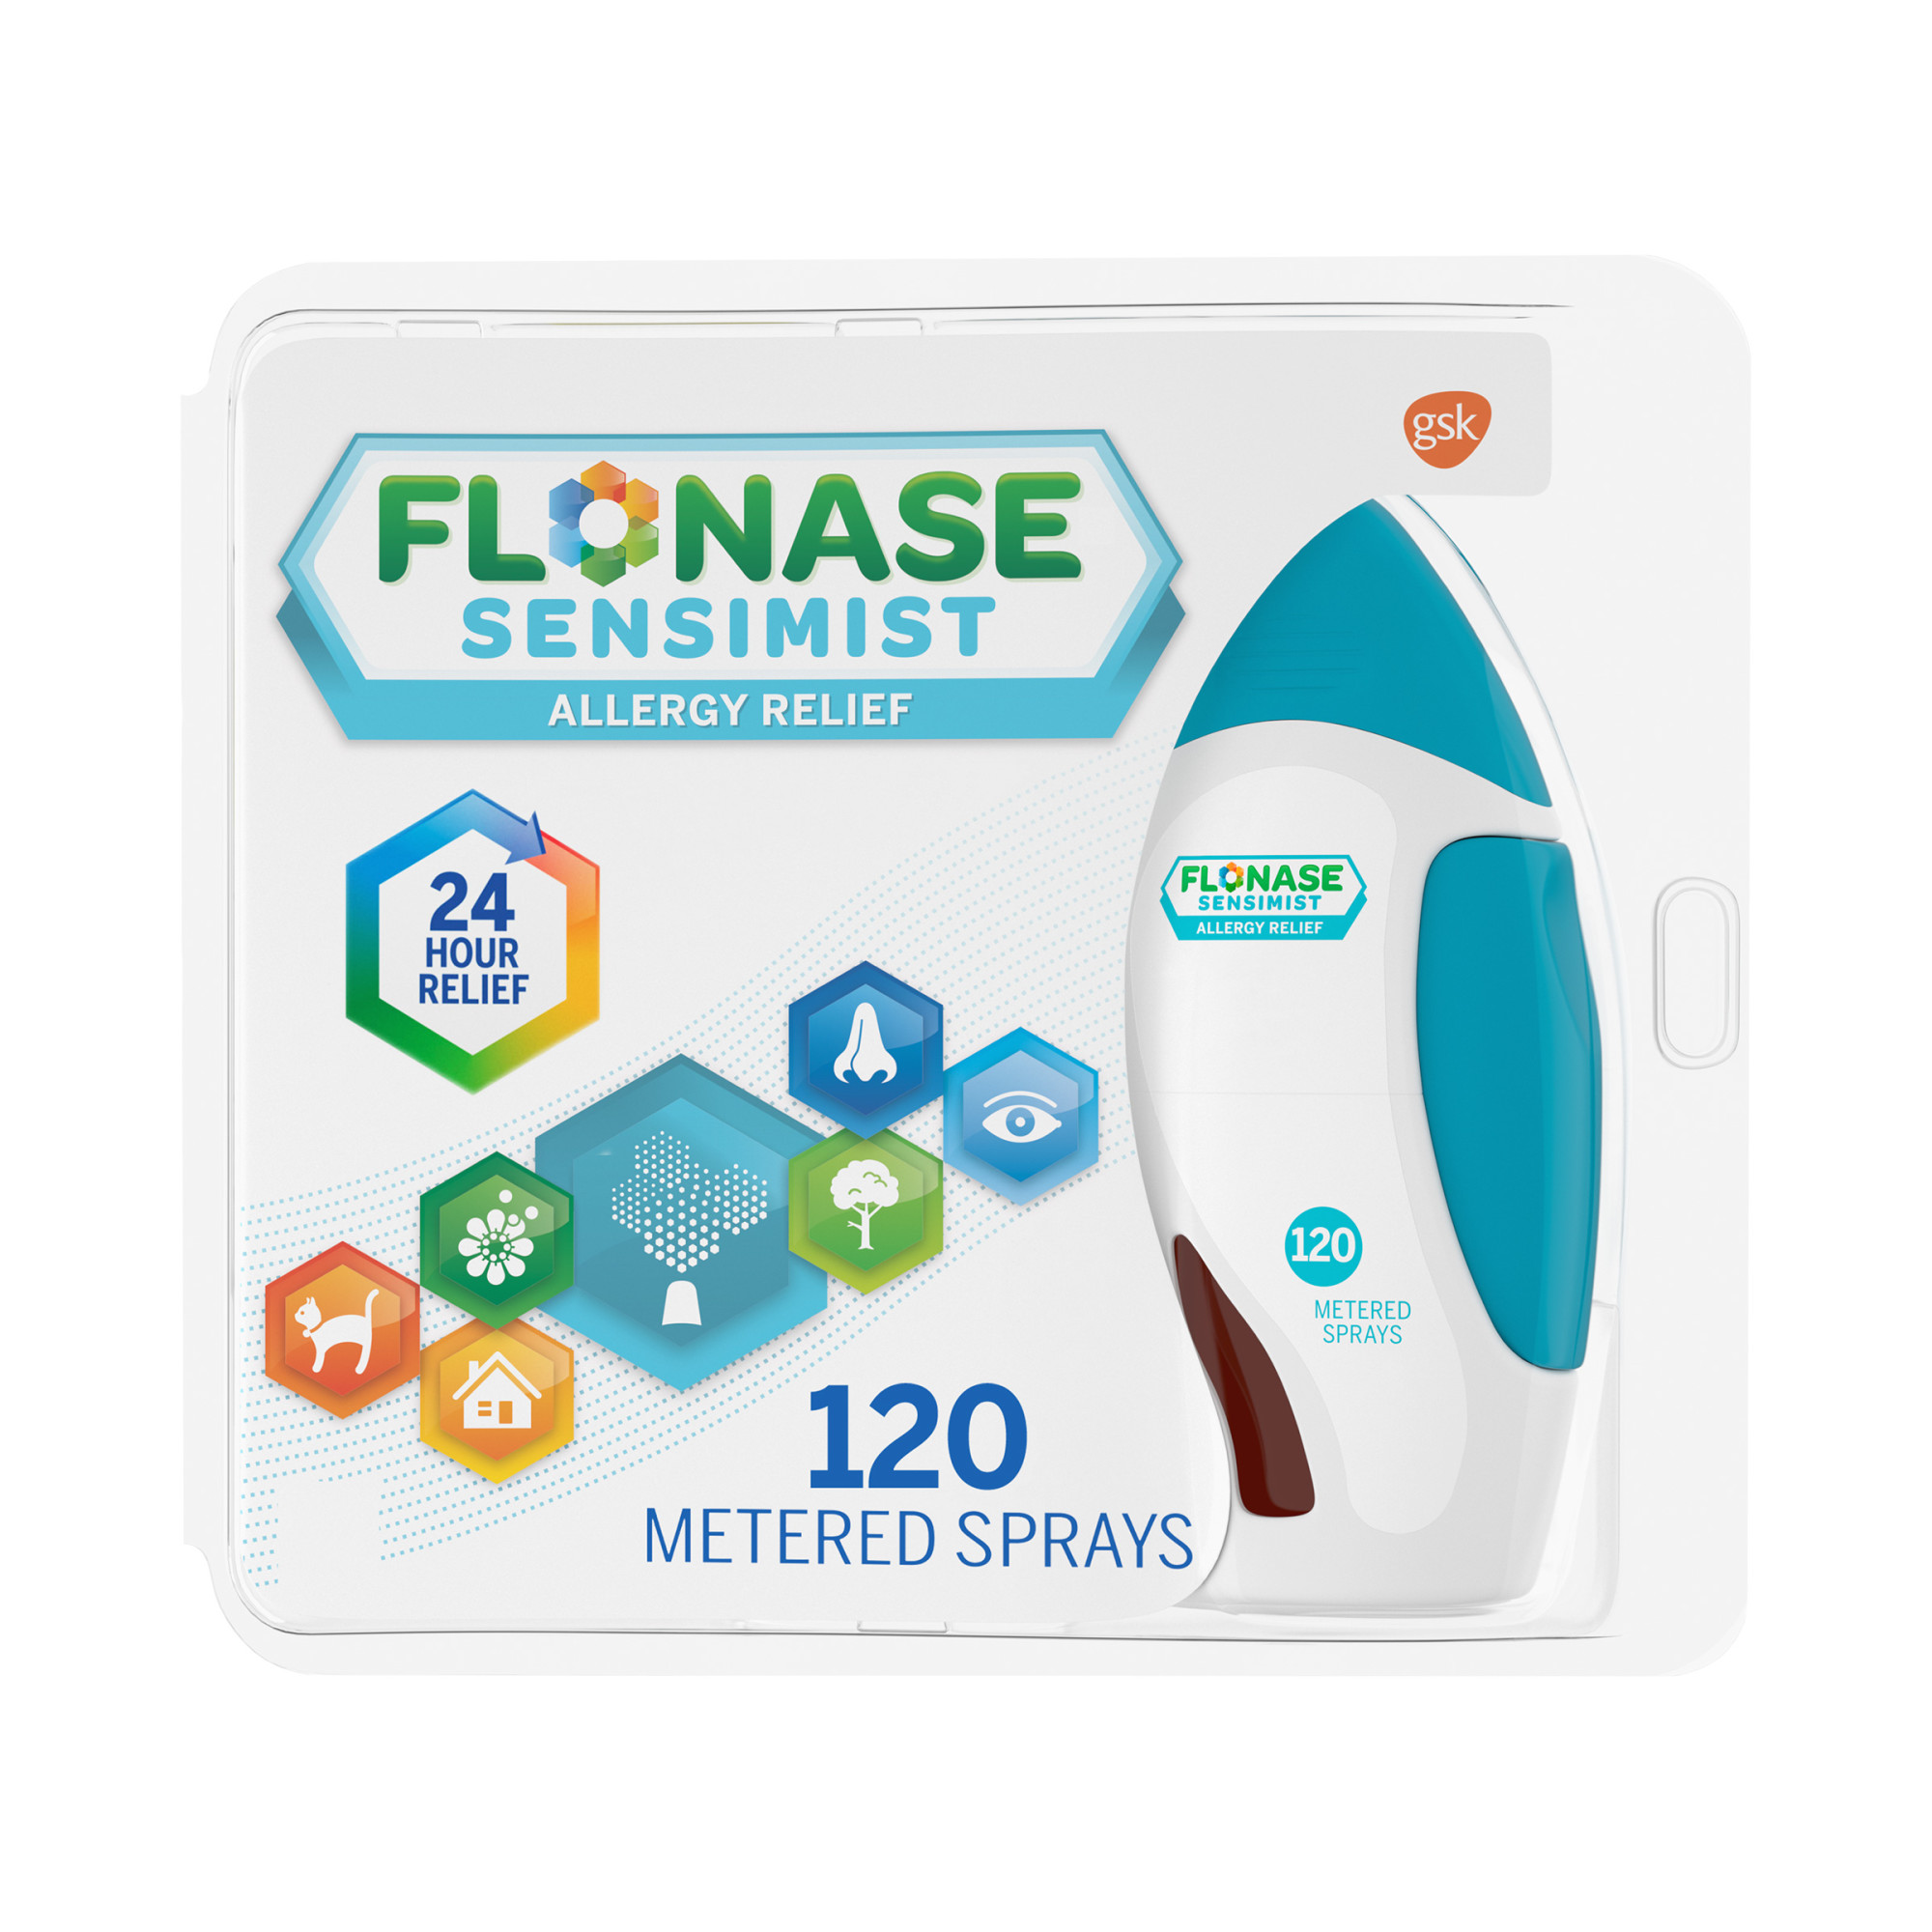 Flonase Sensimist Non-Drowsy Decongestant Allergy Relief Medicine Nasal Spray, 120 Sprays - image 1 of 10